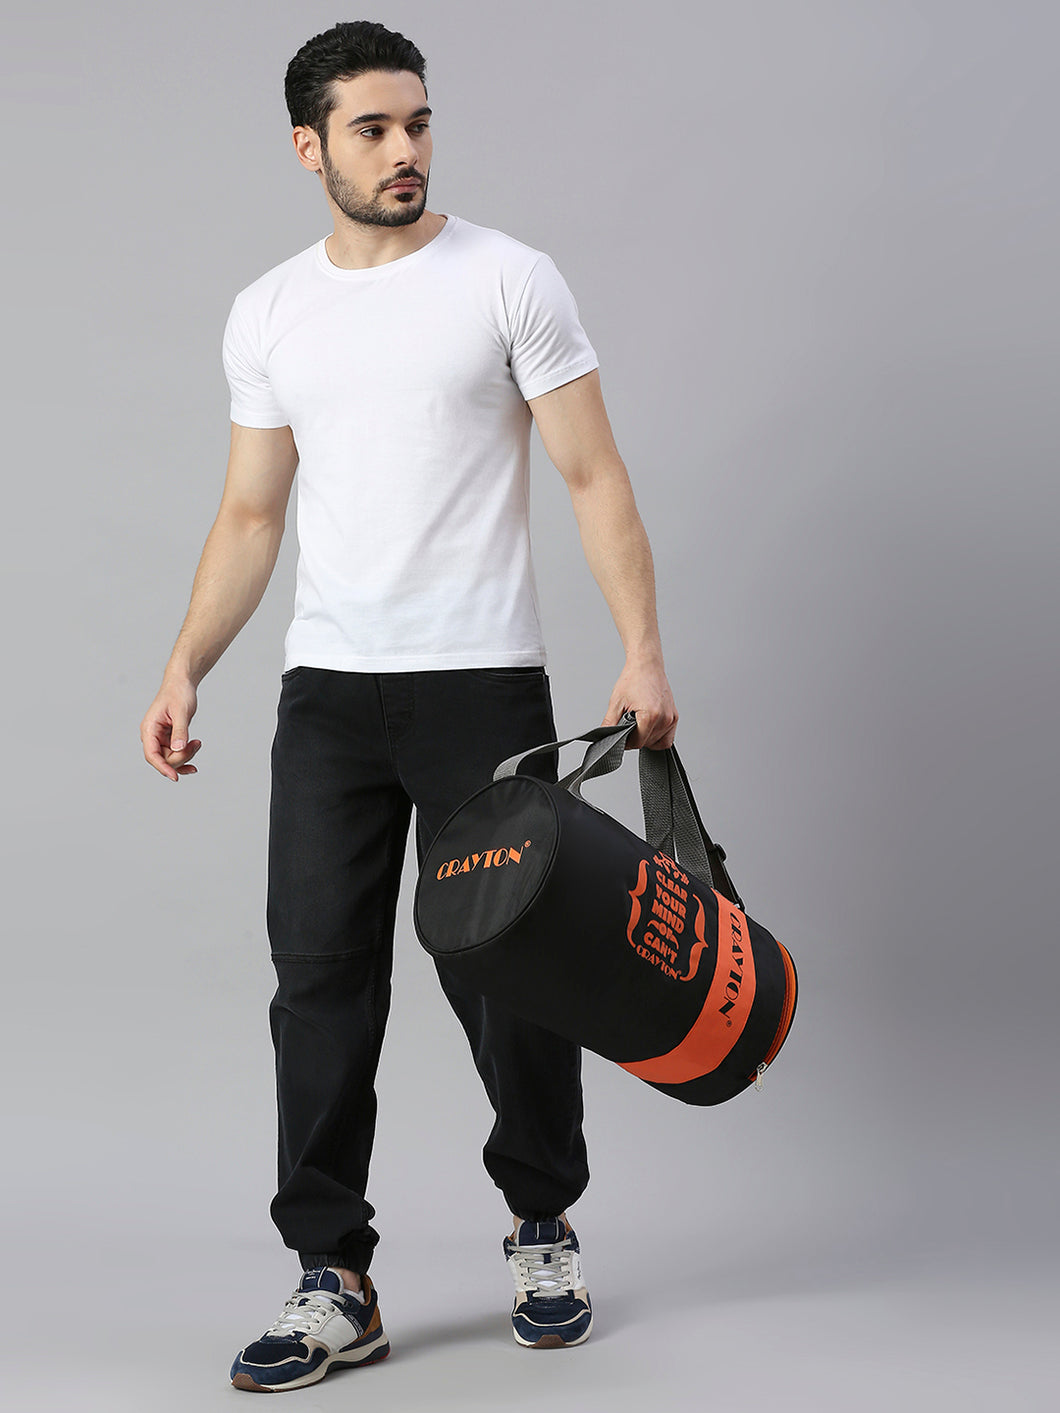 Crayton Gym/ Duffle Orange Black Bag with Shoe Compartment